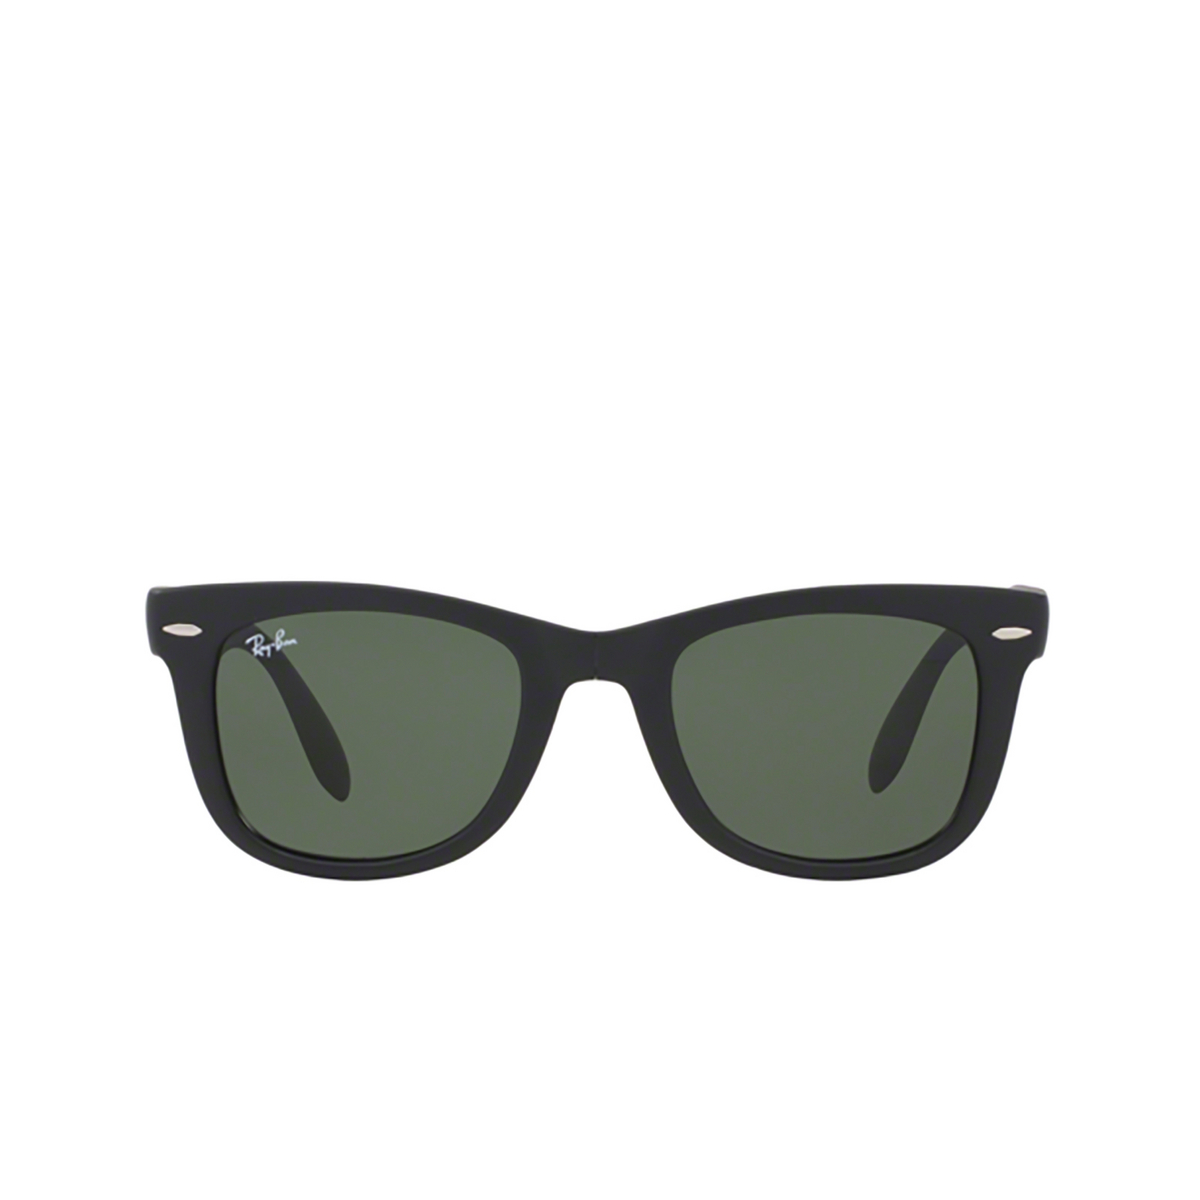 Ray-Ban® Square Sunglasses: Folding Wayfarer RB4105 color Matte Black 601S - 1/3.